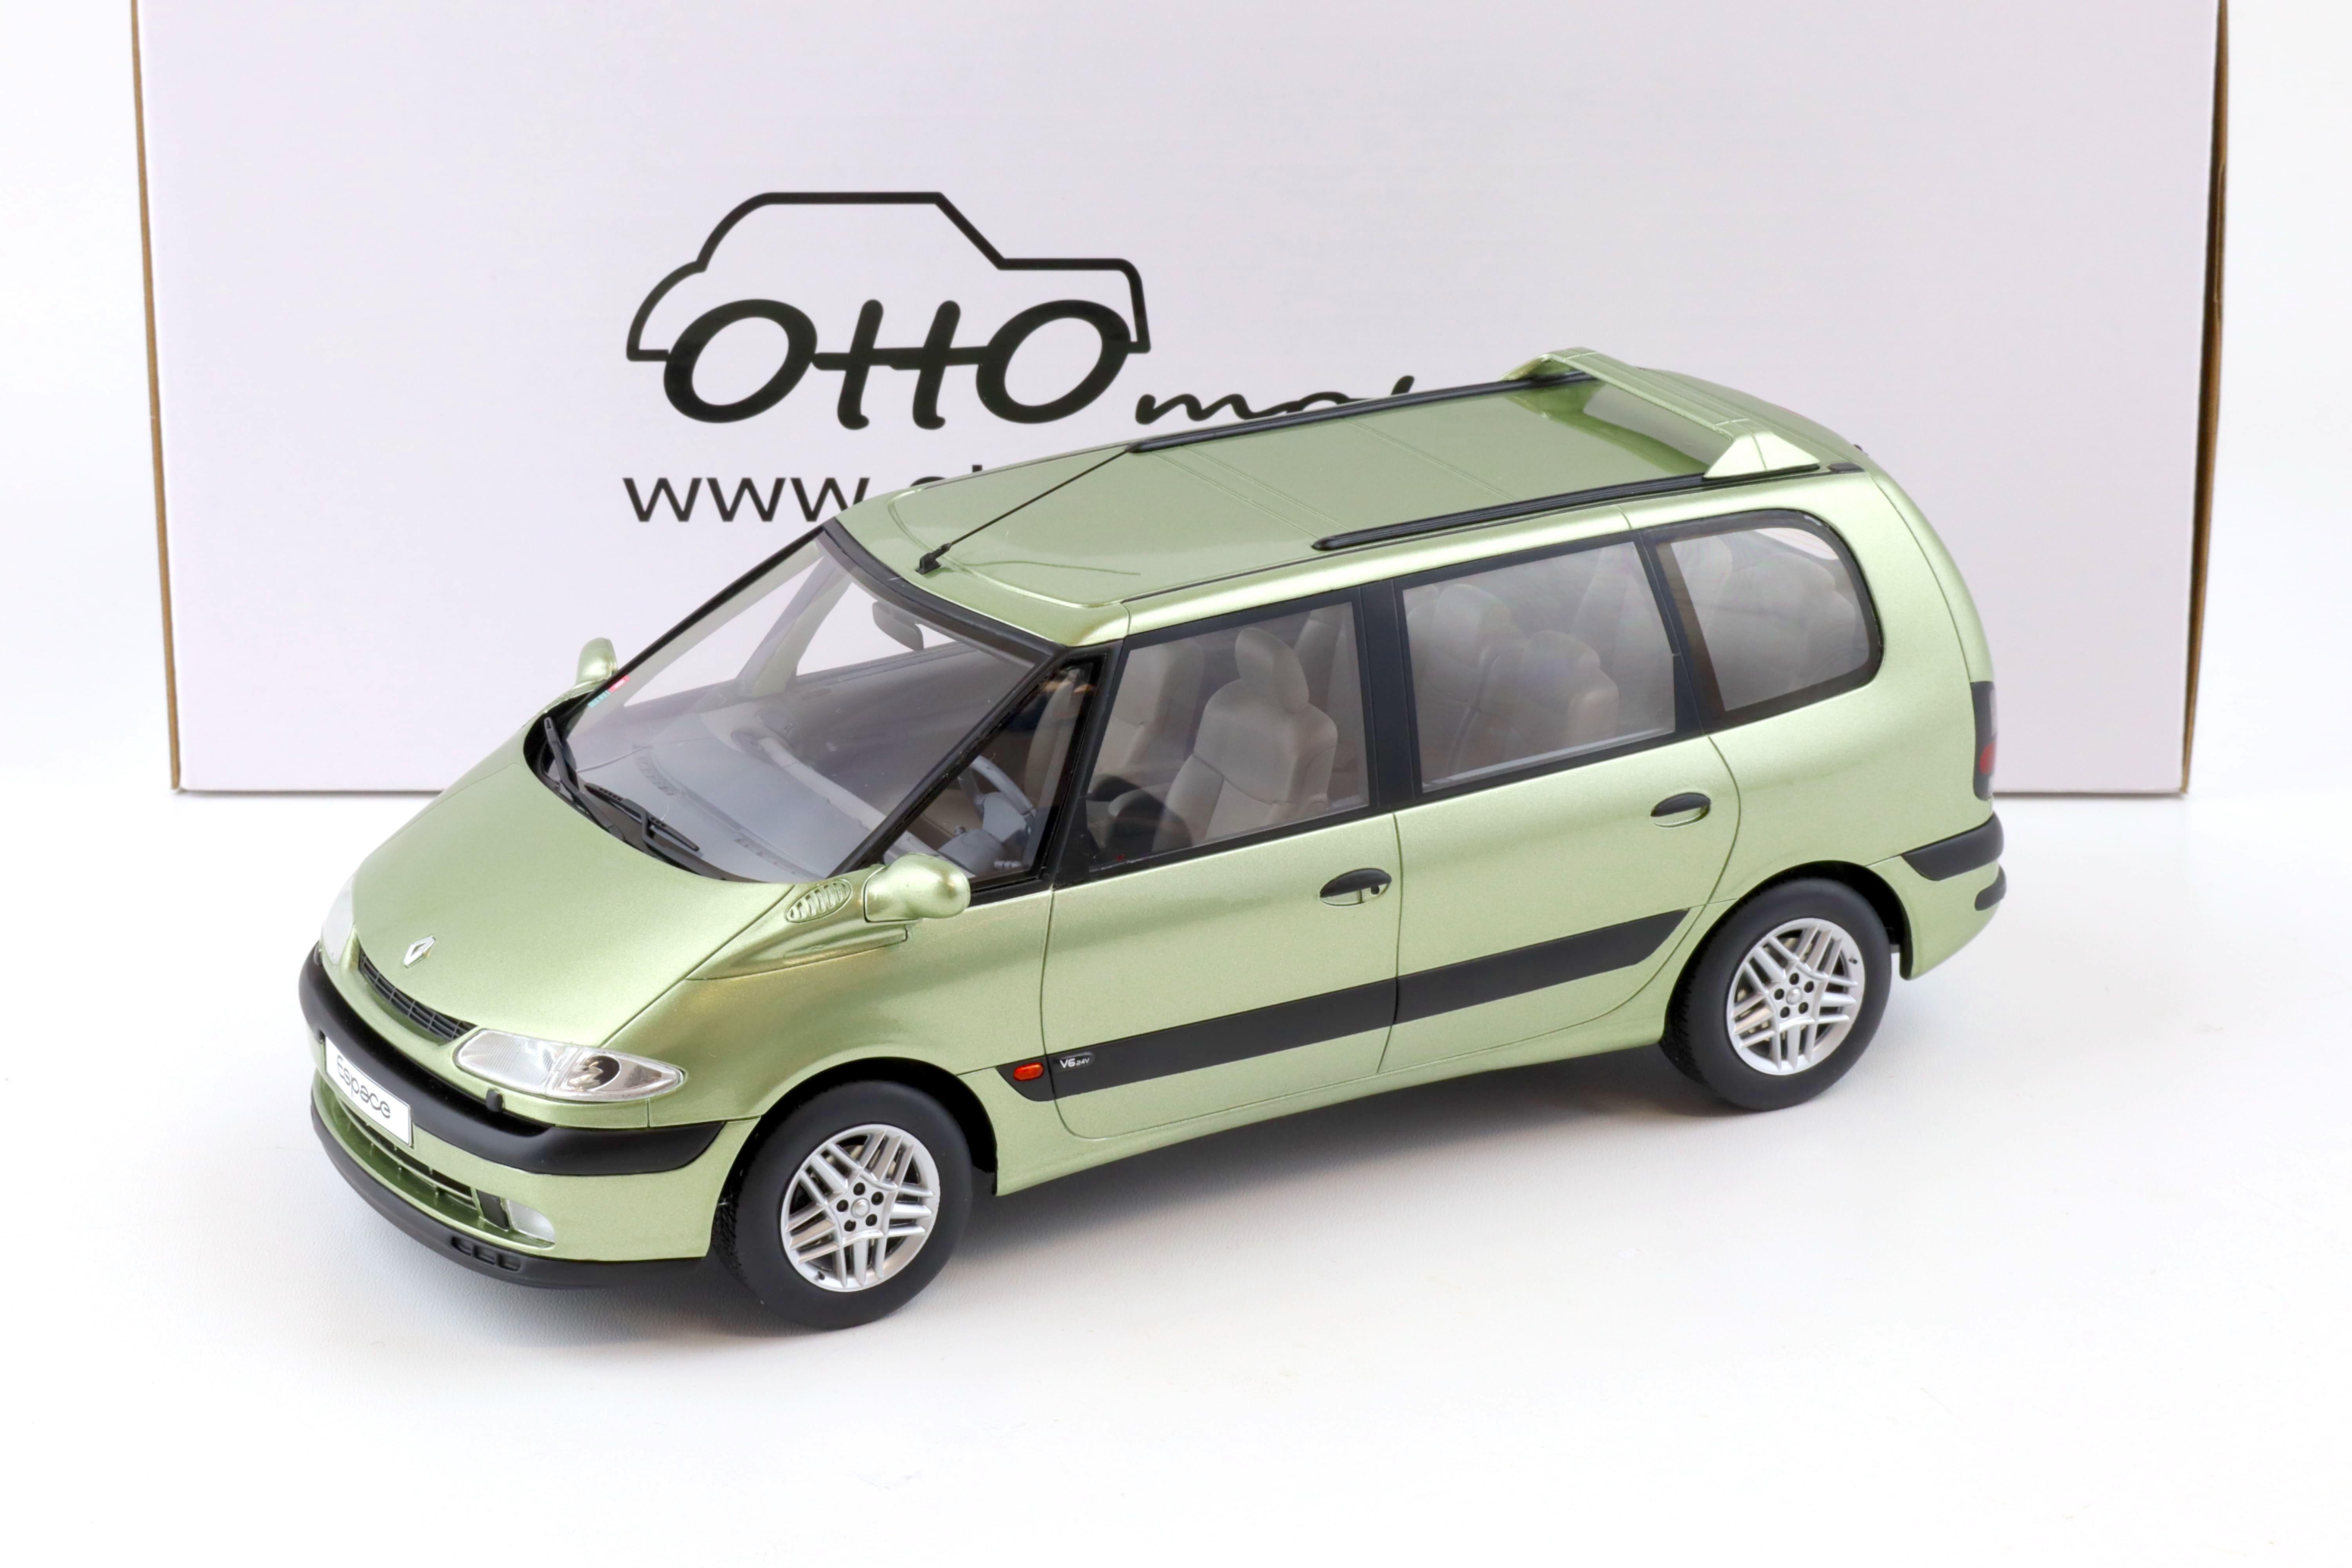 1:18 OTTO mobile OT430 Renault Espace 3 green metallic 2001